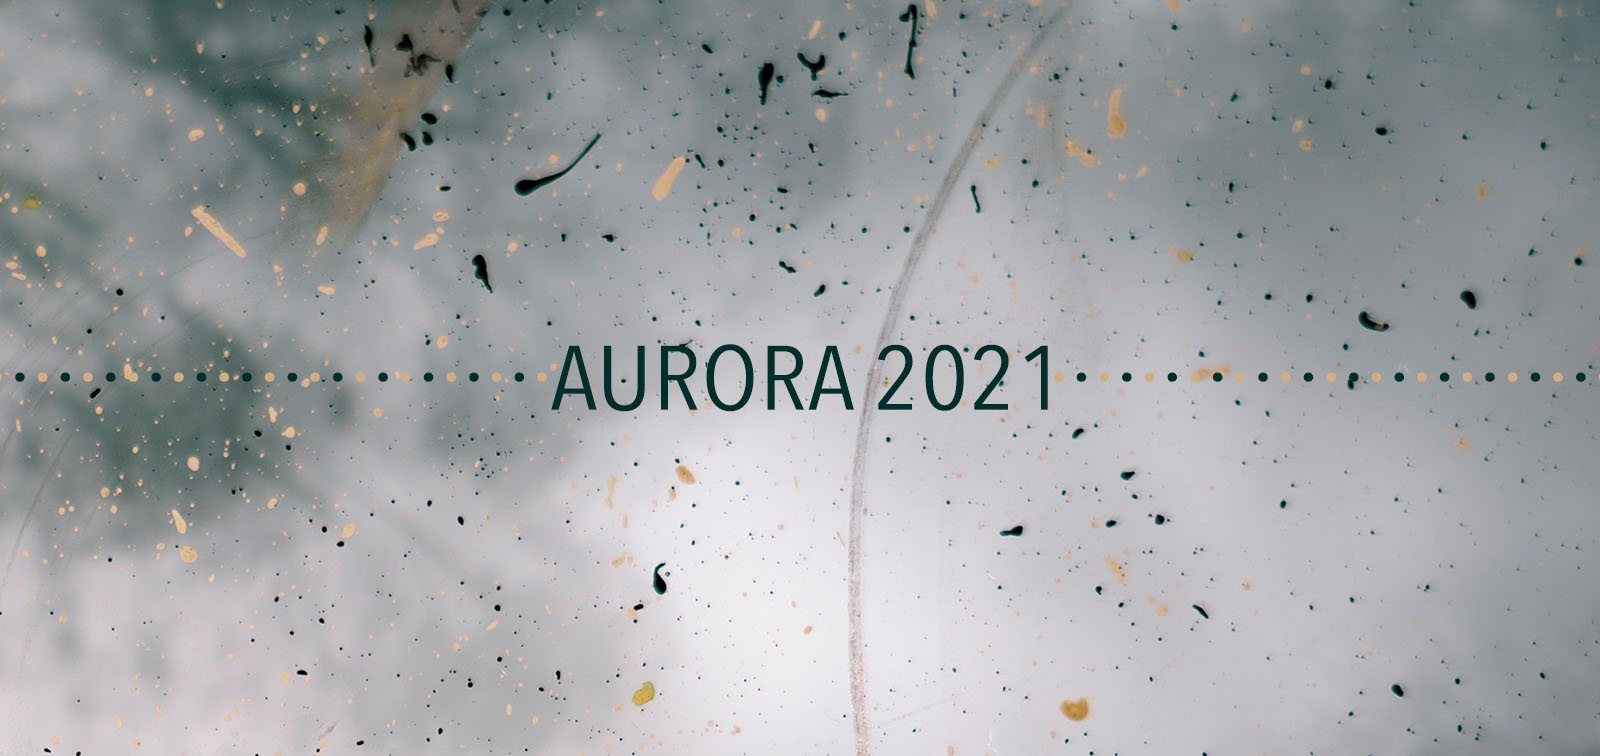 Projecte AURORA 2021